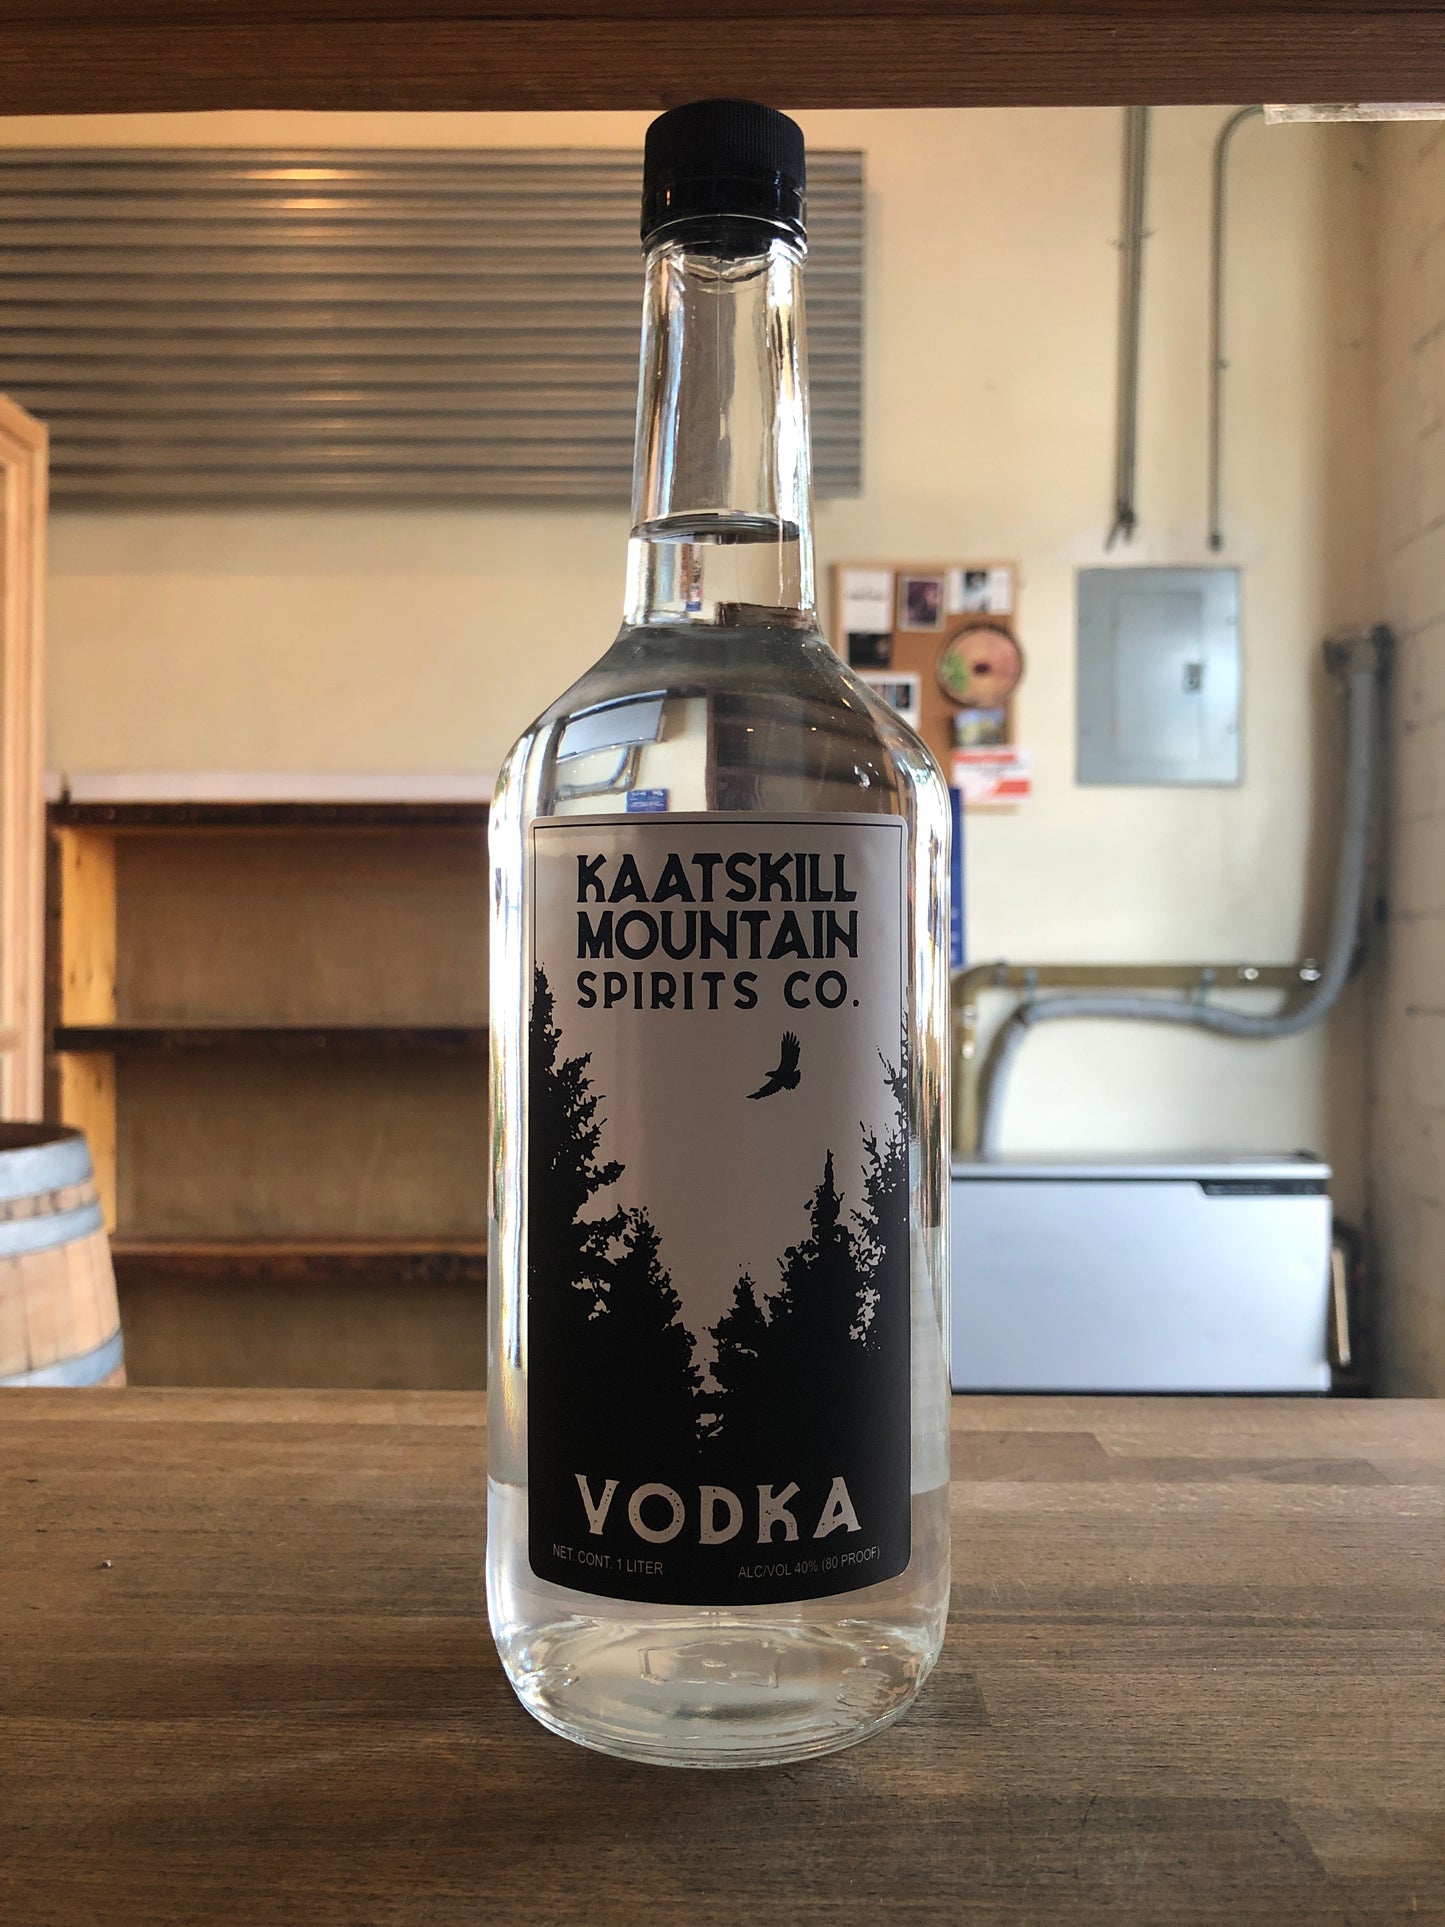 Kaatskill Mt. Spirits Co. Vodka